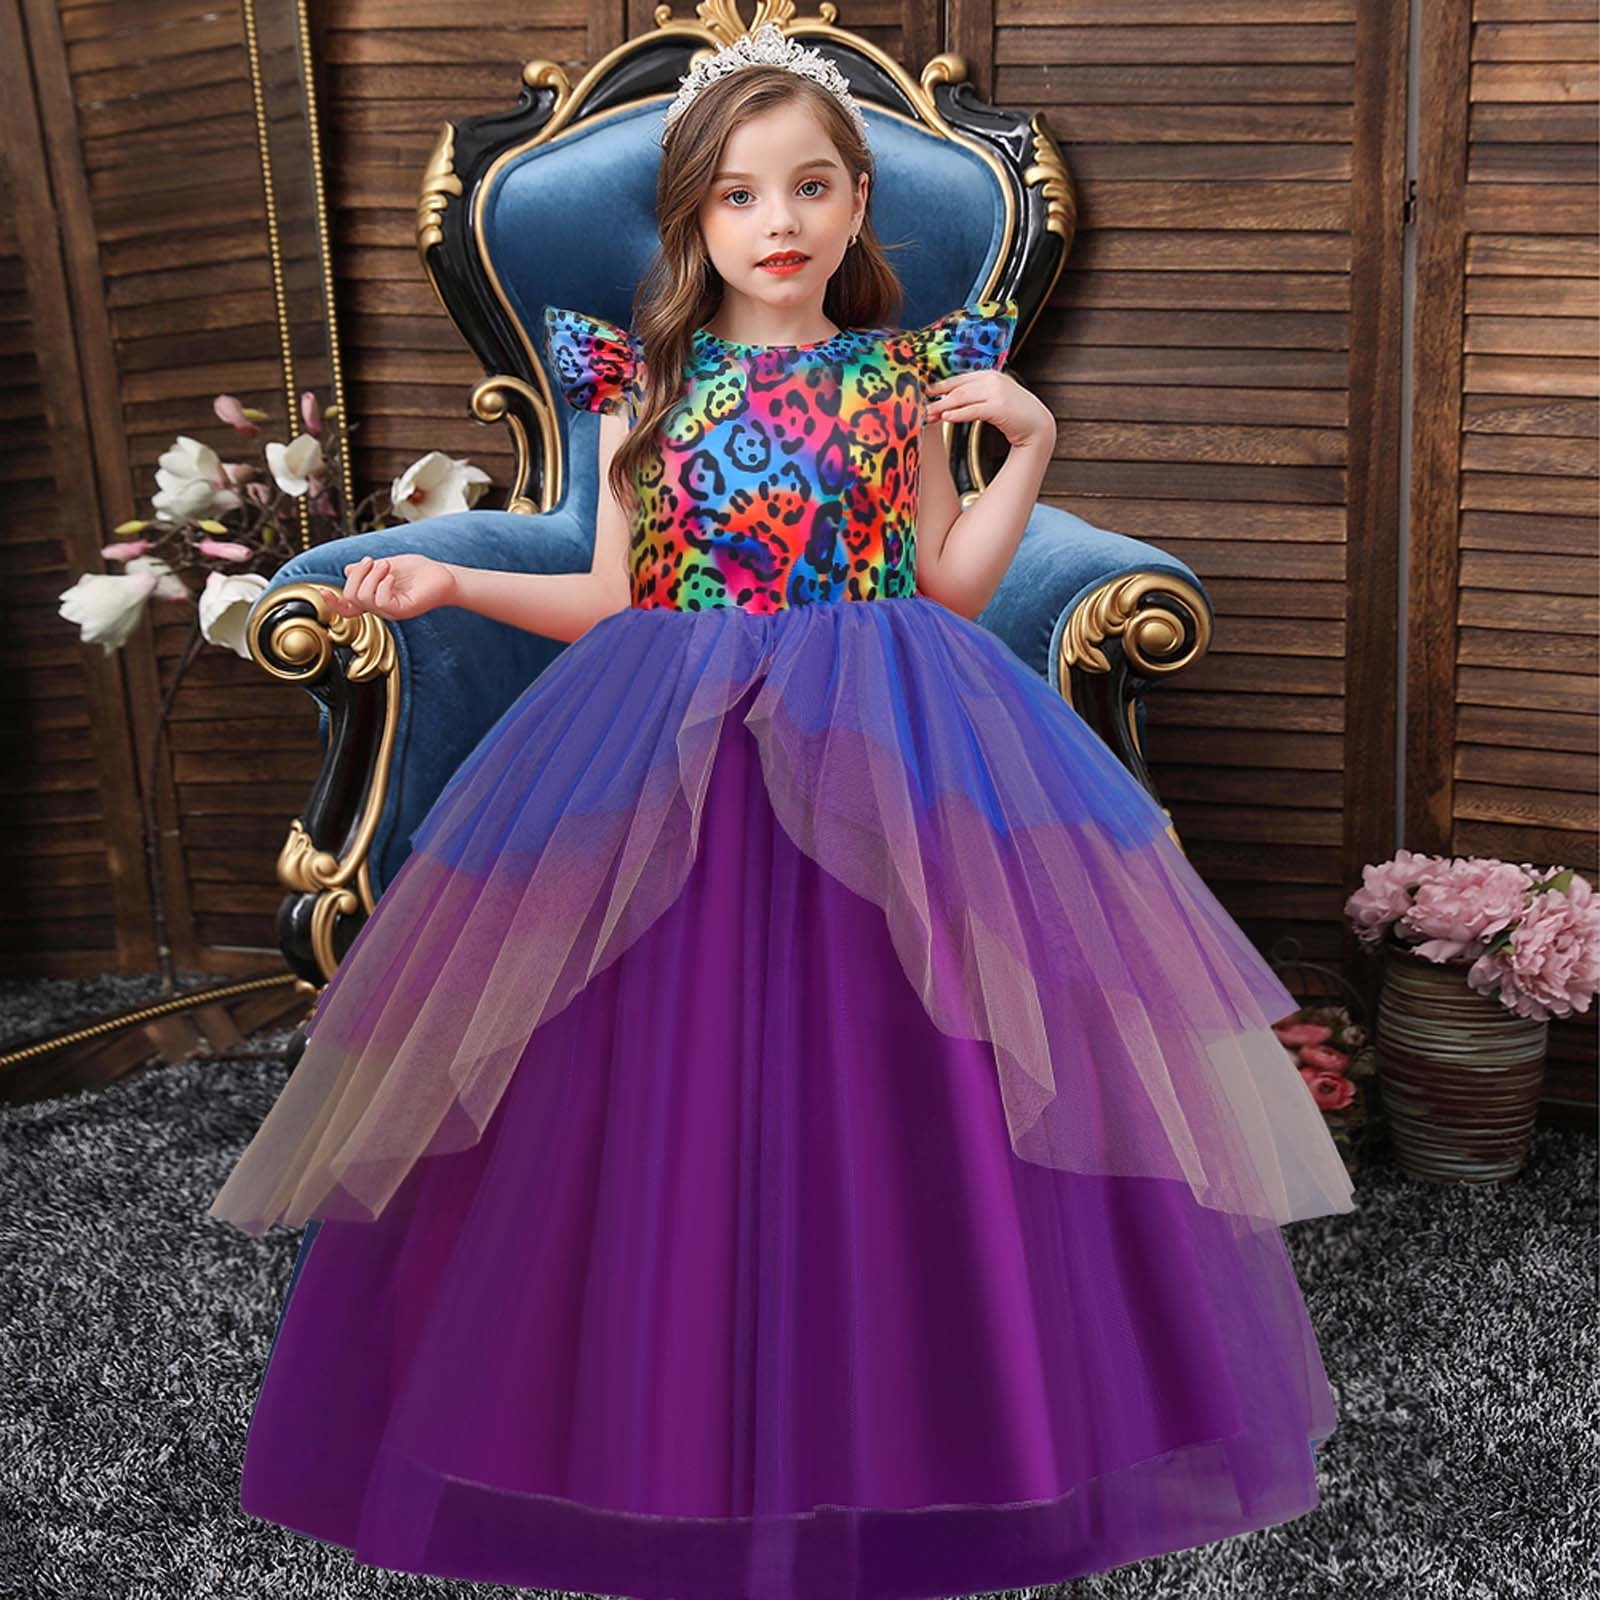 YWDJ 3-12 Years Party Girls Dresses Kids Dress Sleeveless Princess Bow Tie  Lace Flowers Mesh Tufted Sky Blue 7-8 Years - Walmart.com